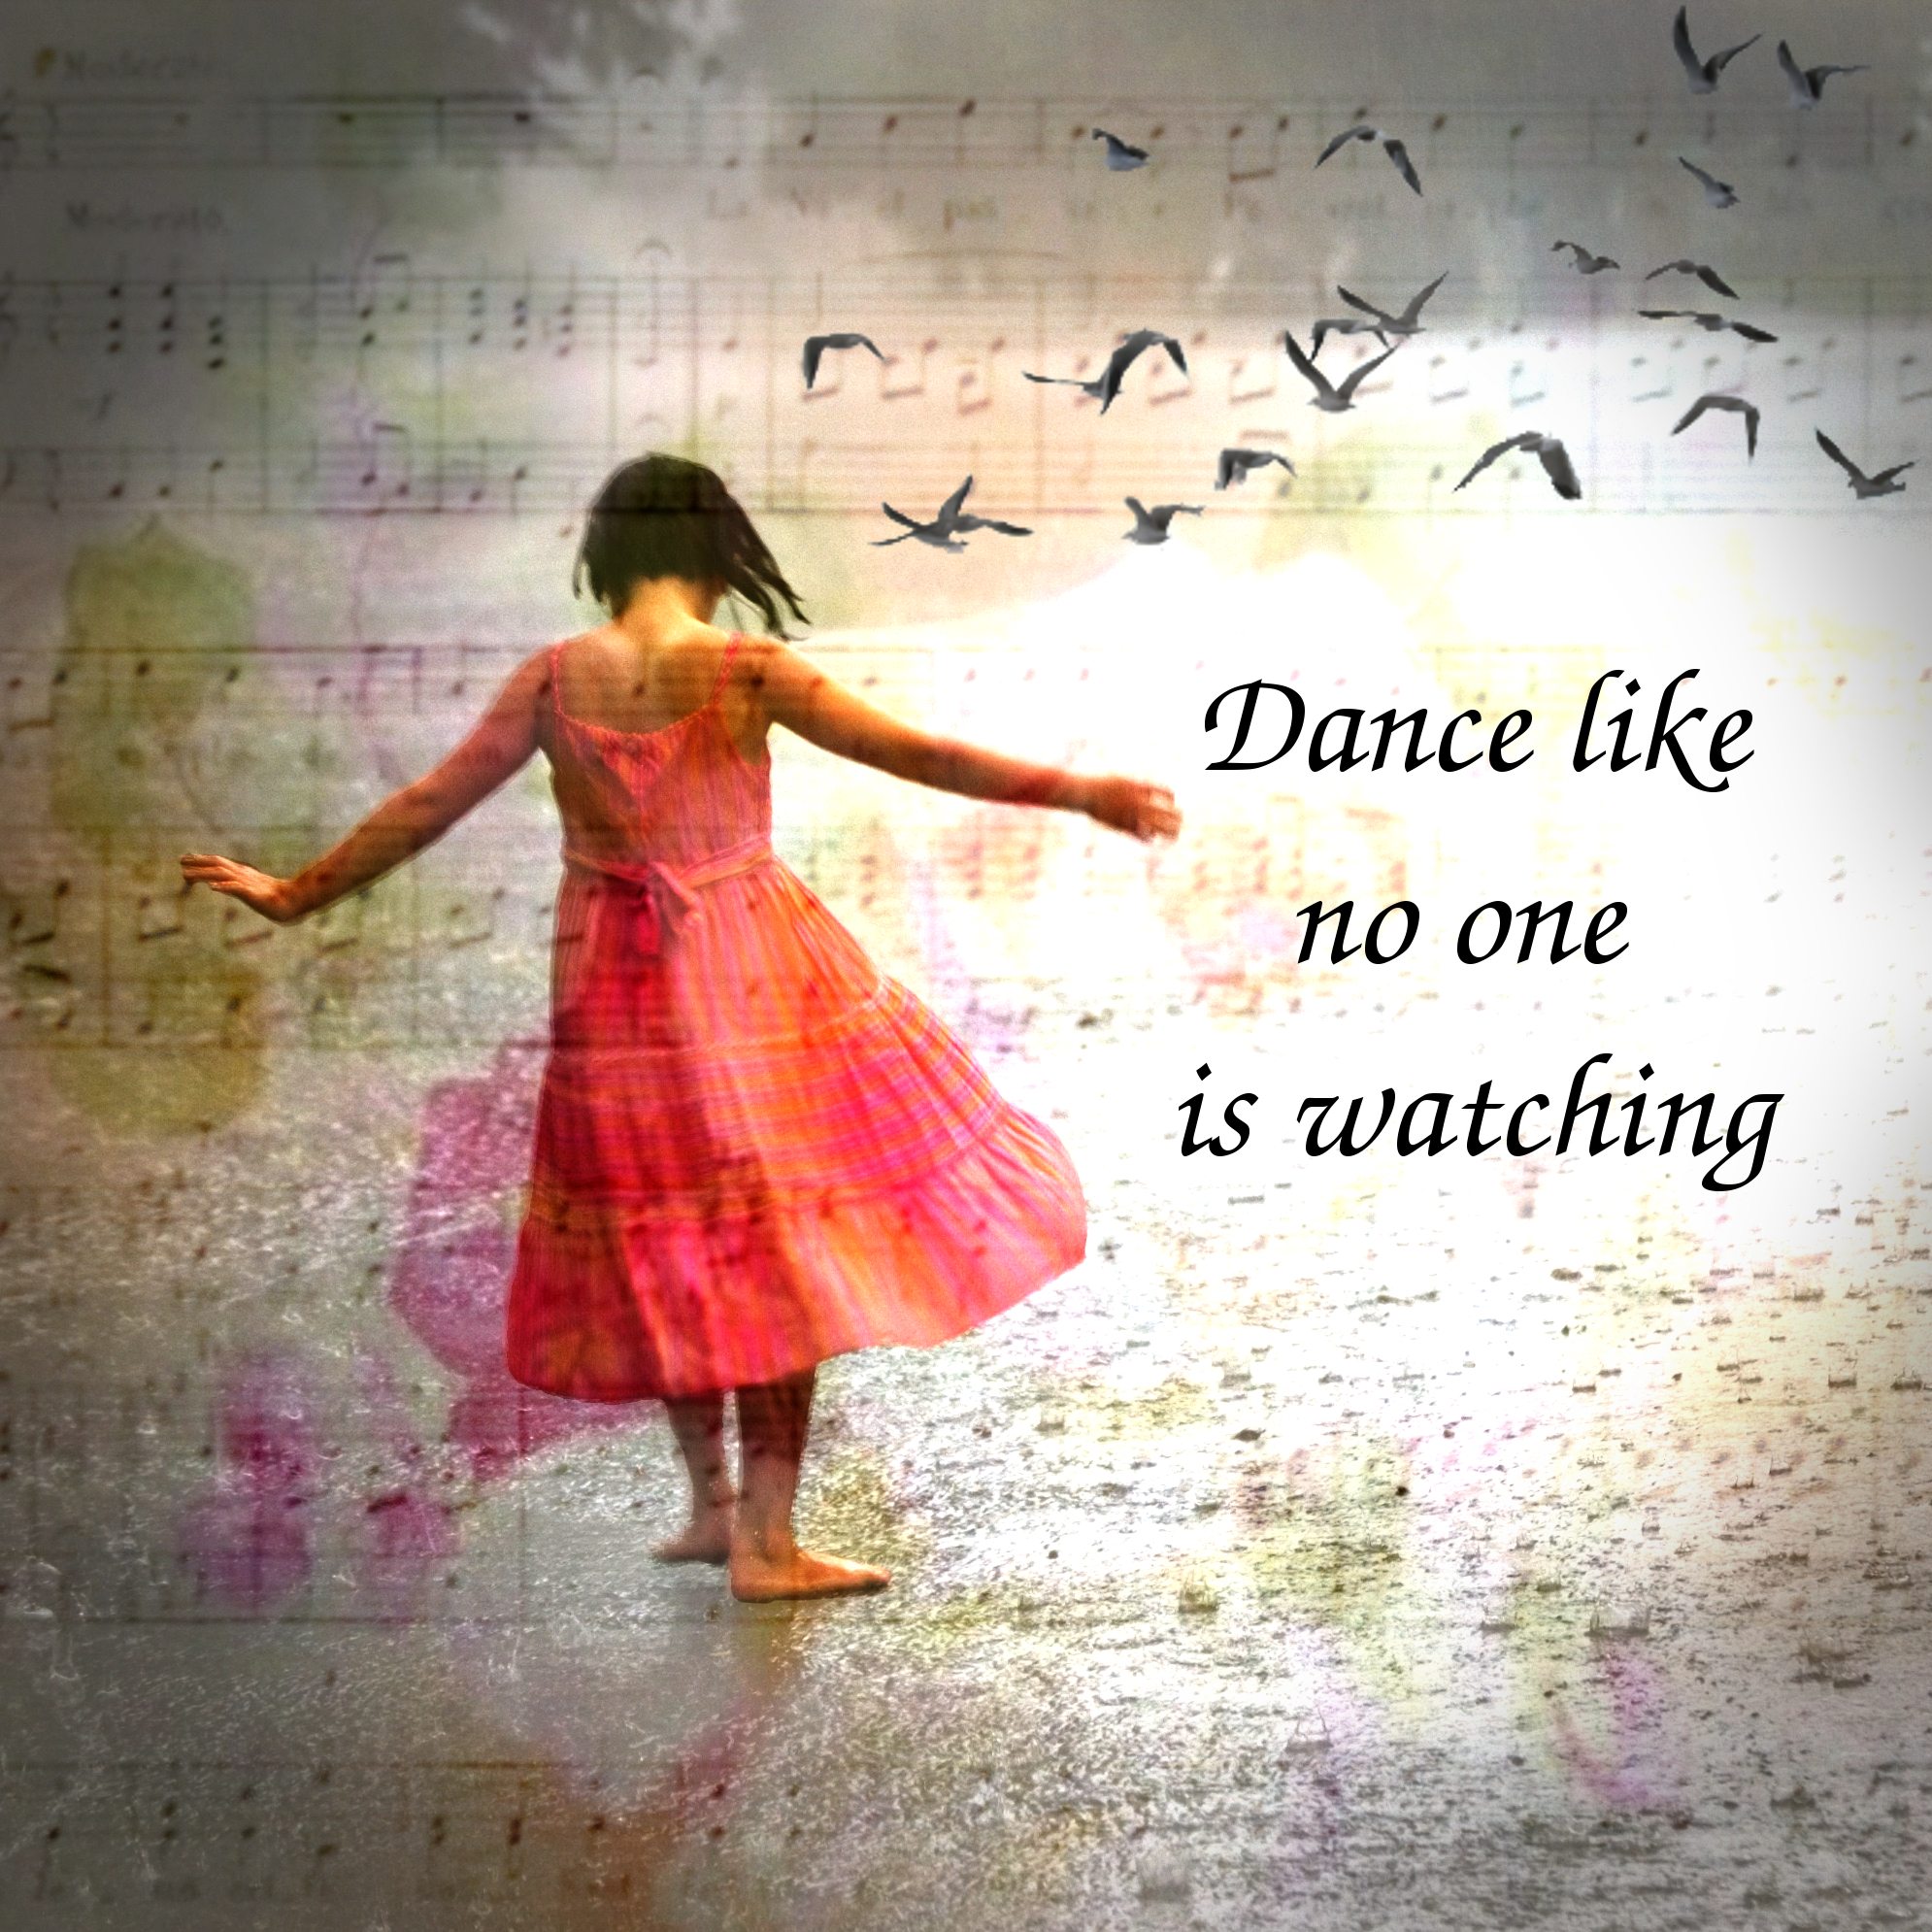 Музыка жизнь танец. Цитаты про танцы. Dance цитаты. Танцы это жизнь цитаты. Танцевать афоризмы.